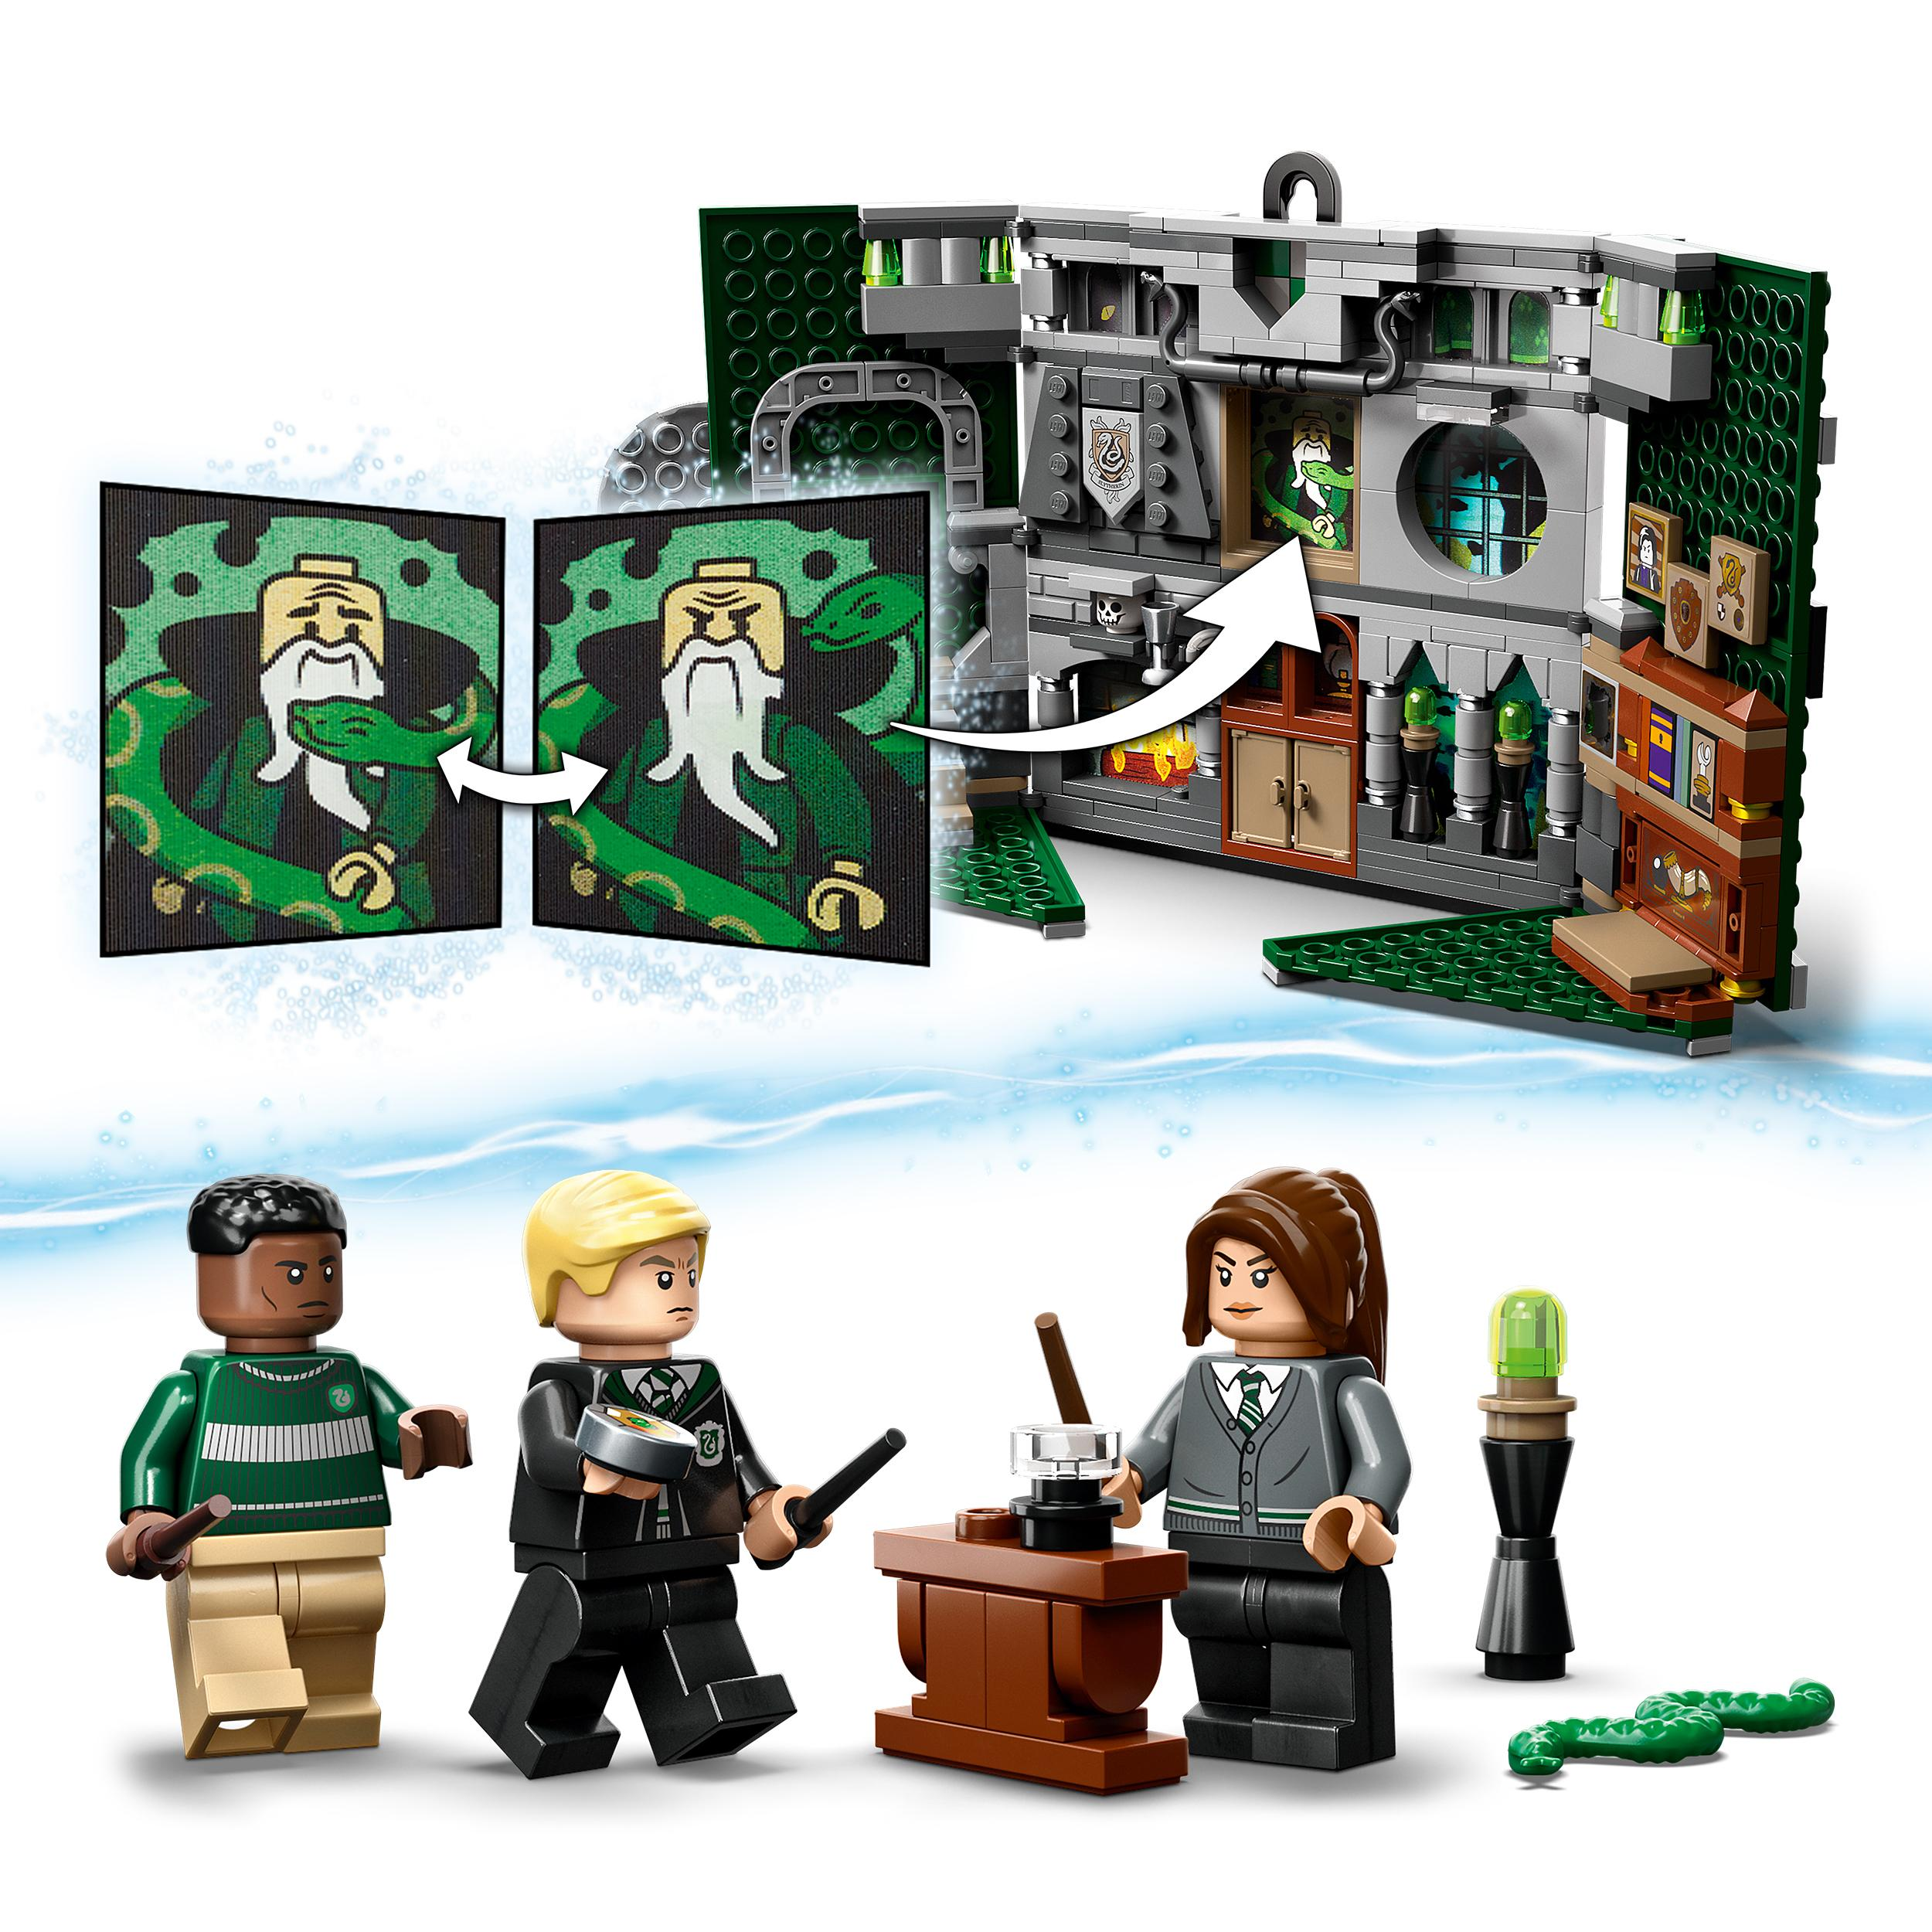 Bausatz, Hausbanner Mehrfarbig 76410 Harry Slytherin Potter LEGO